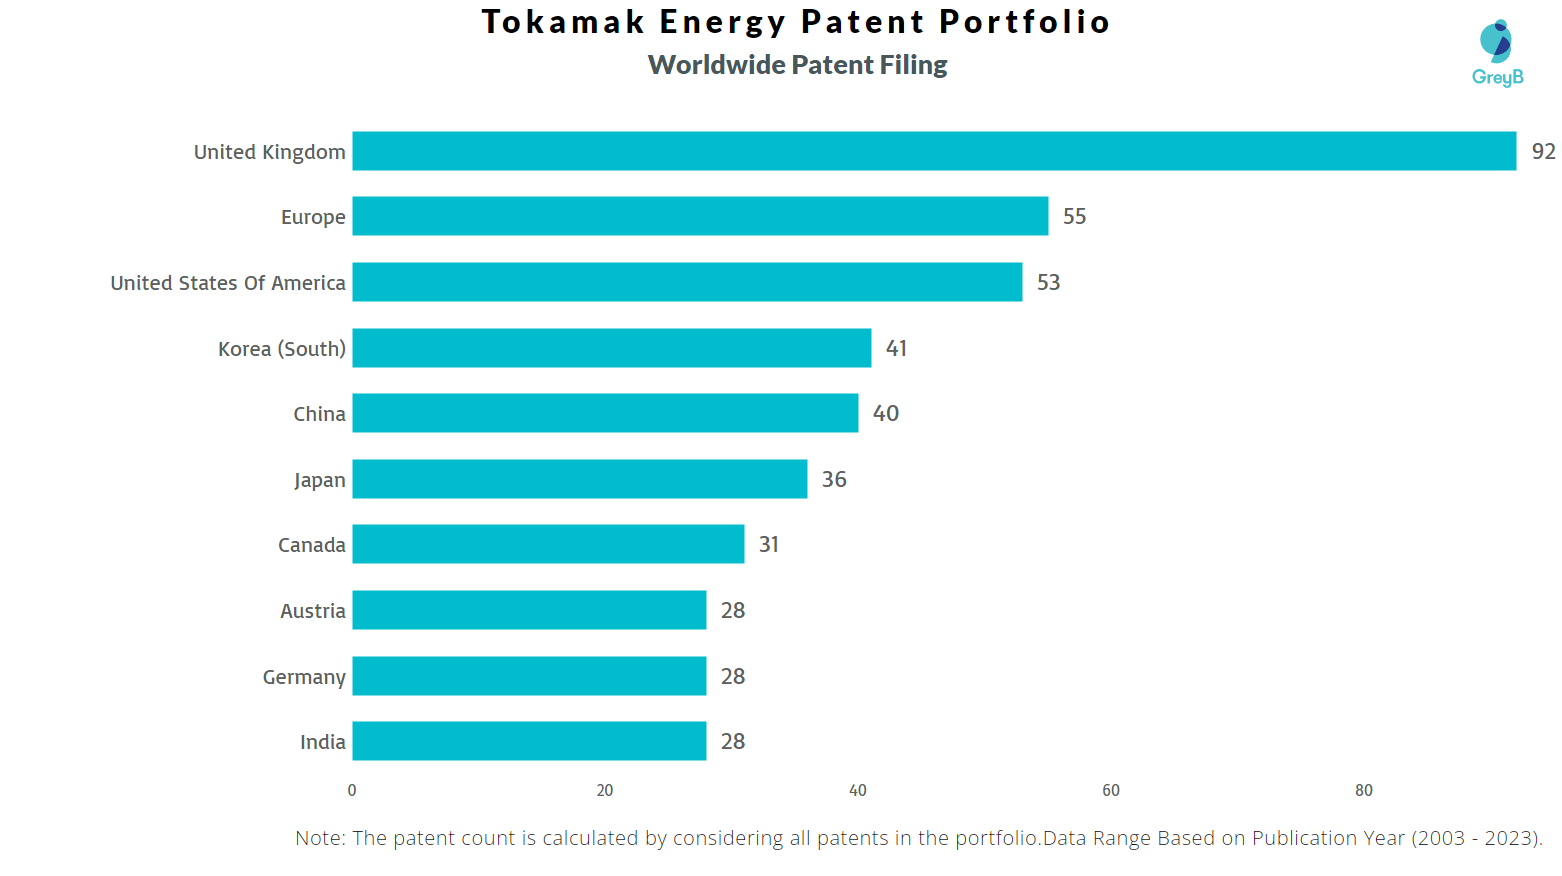 Tokamak Energy Worldwide Patent Filing